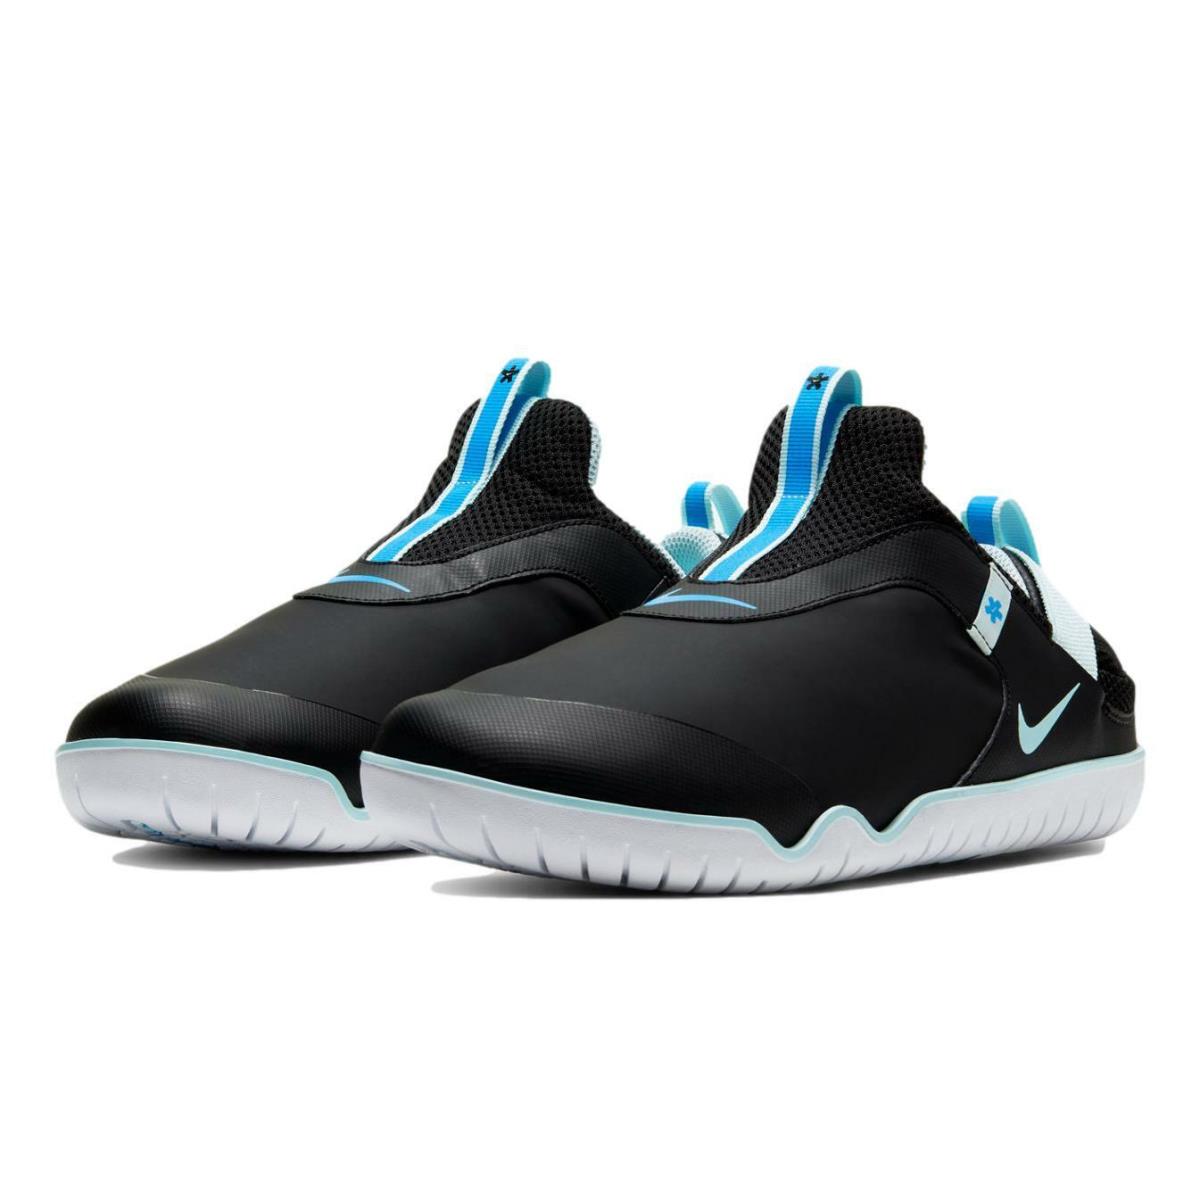 Nike Zoom Pulse `black Teal Tint` Nurse Medical Slip-on Shoes CT1629-001